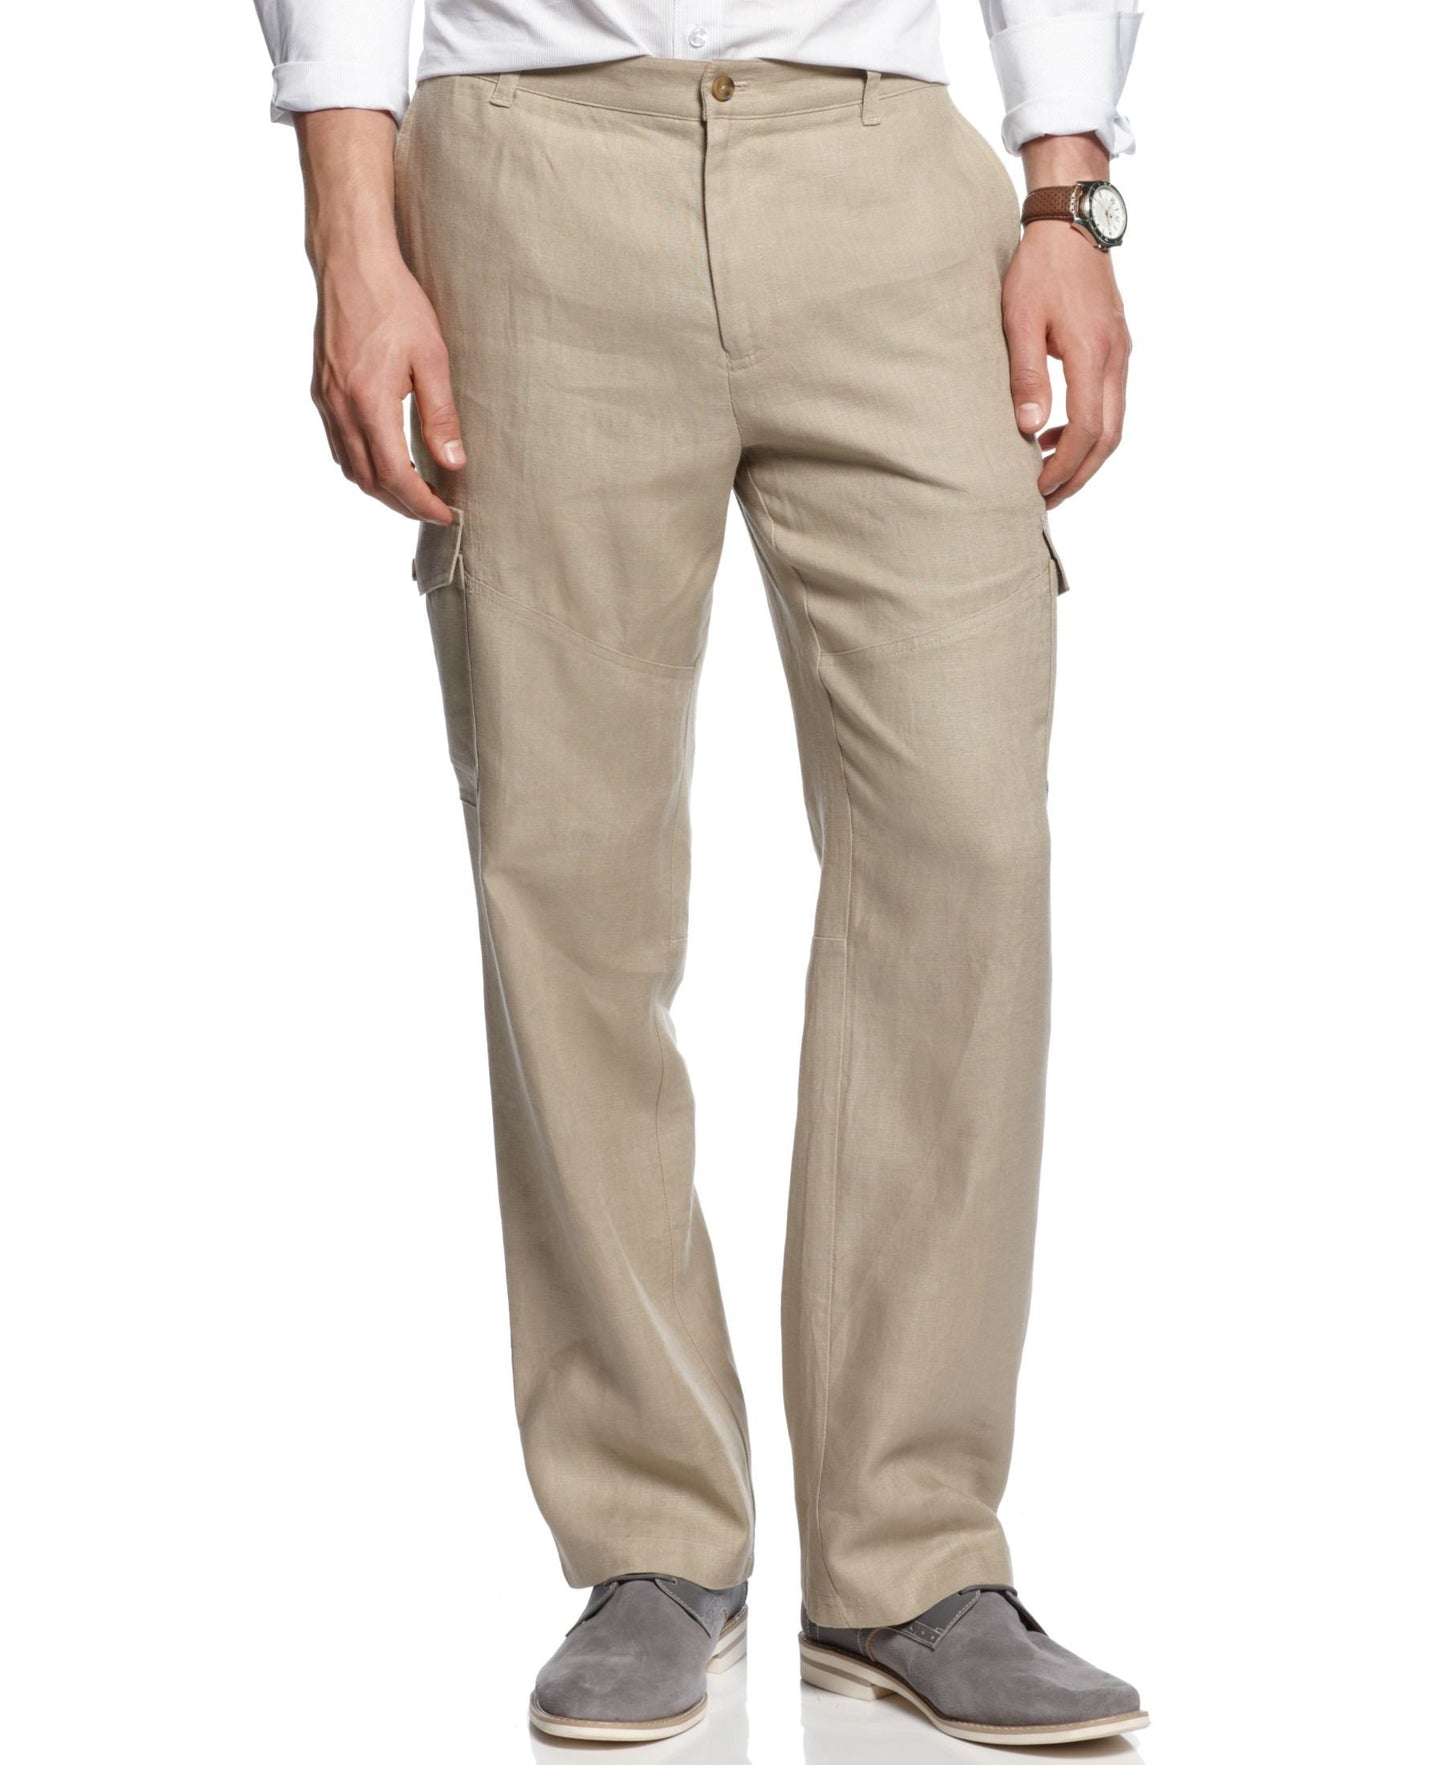 INC International Concepts Pants, Linen Cargo Pants Khaki